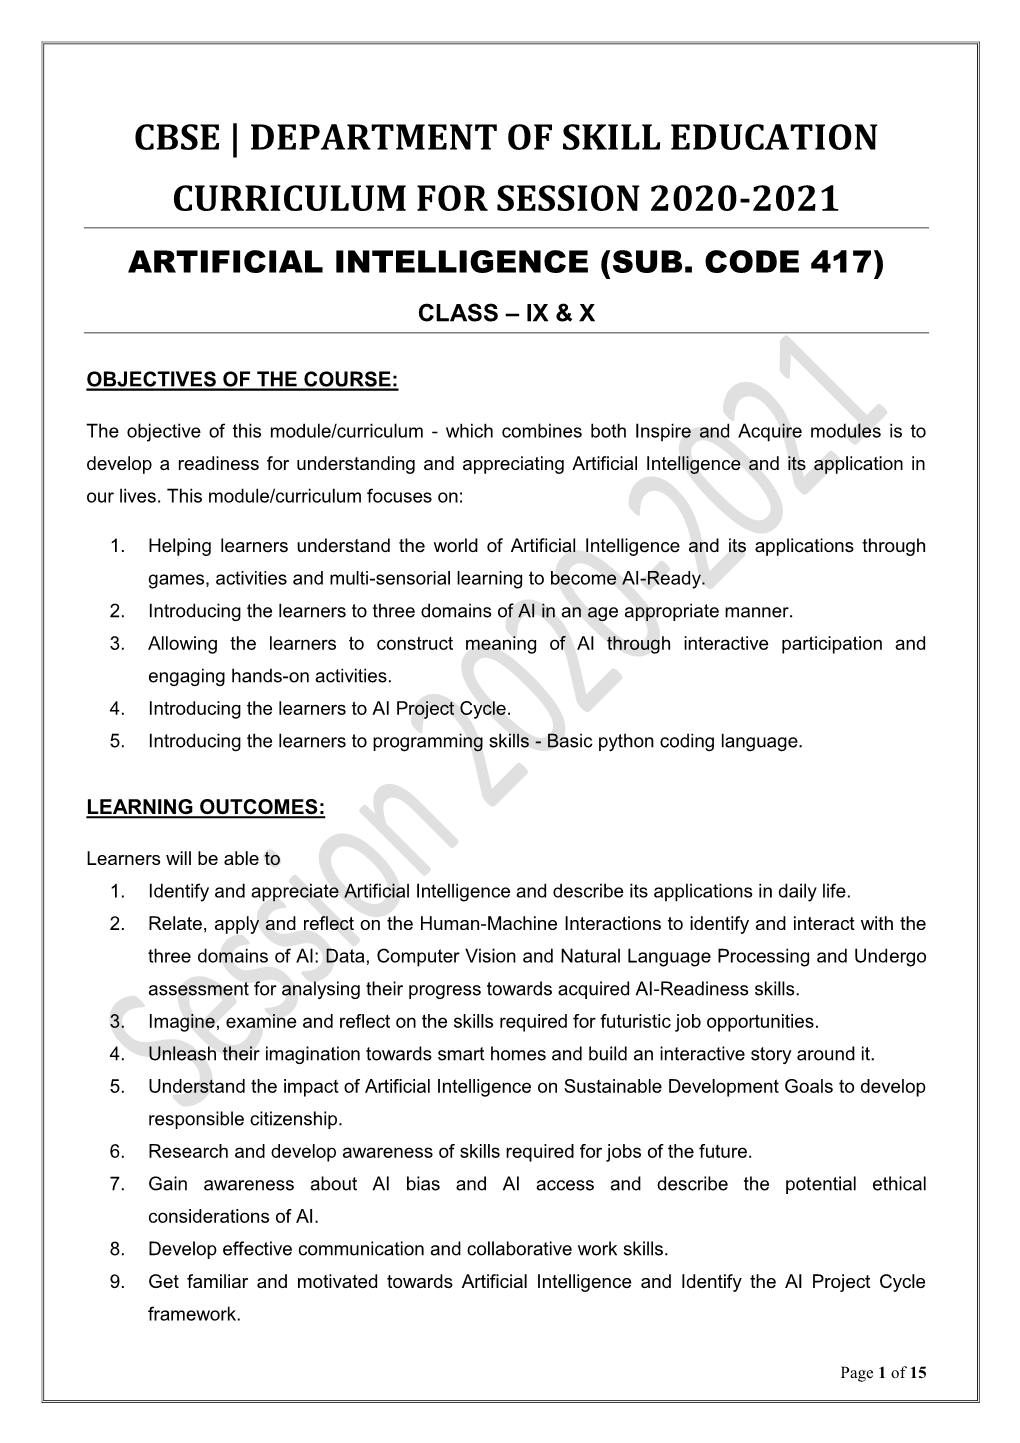 Artificial Intelligence (Sub